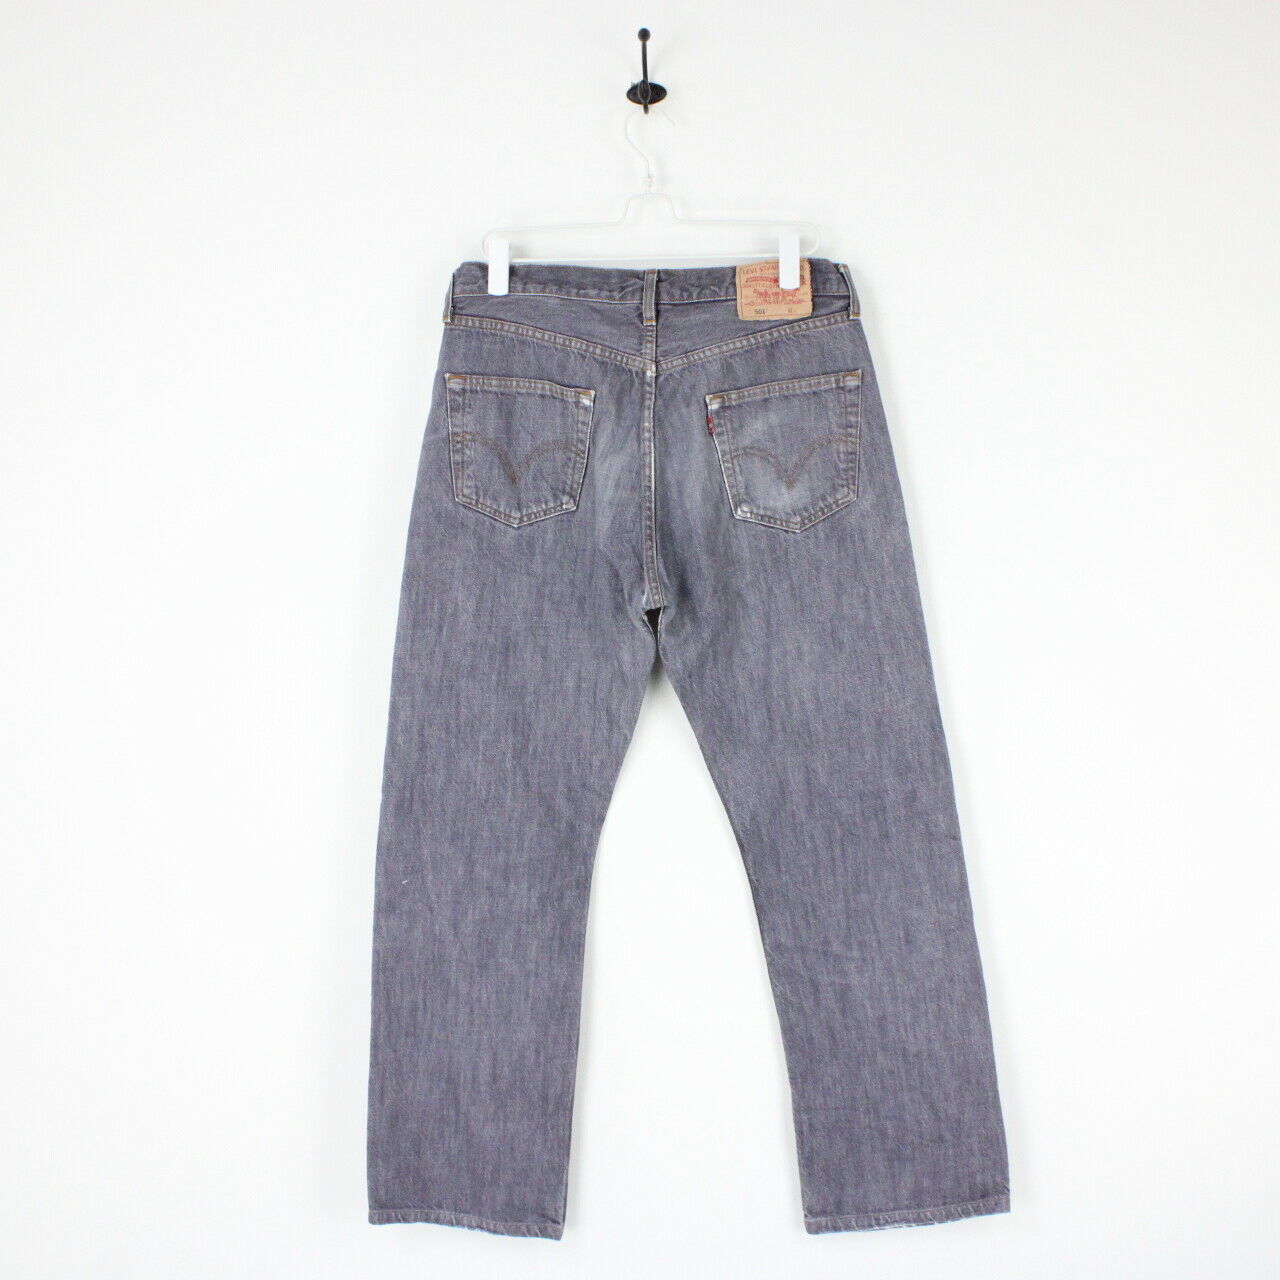 Mens LEVIS 501 Jeans Grey | W33 L30